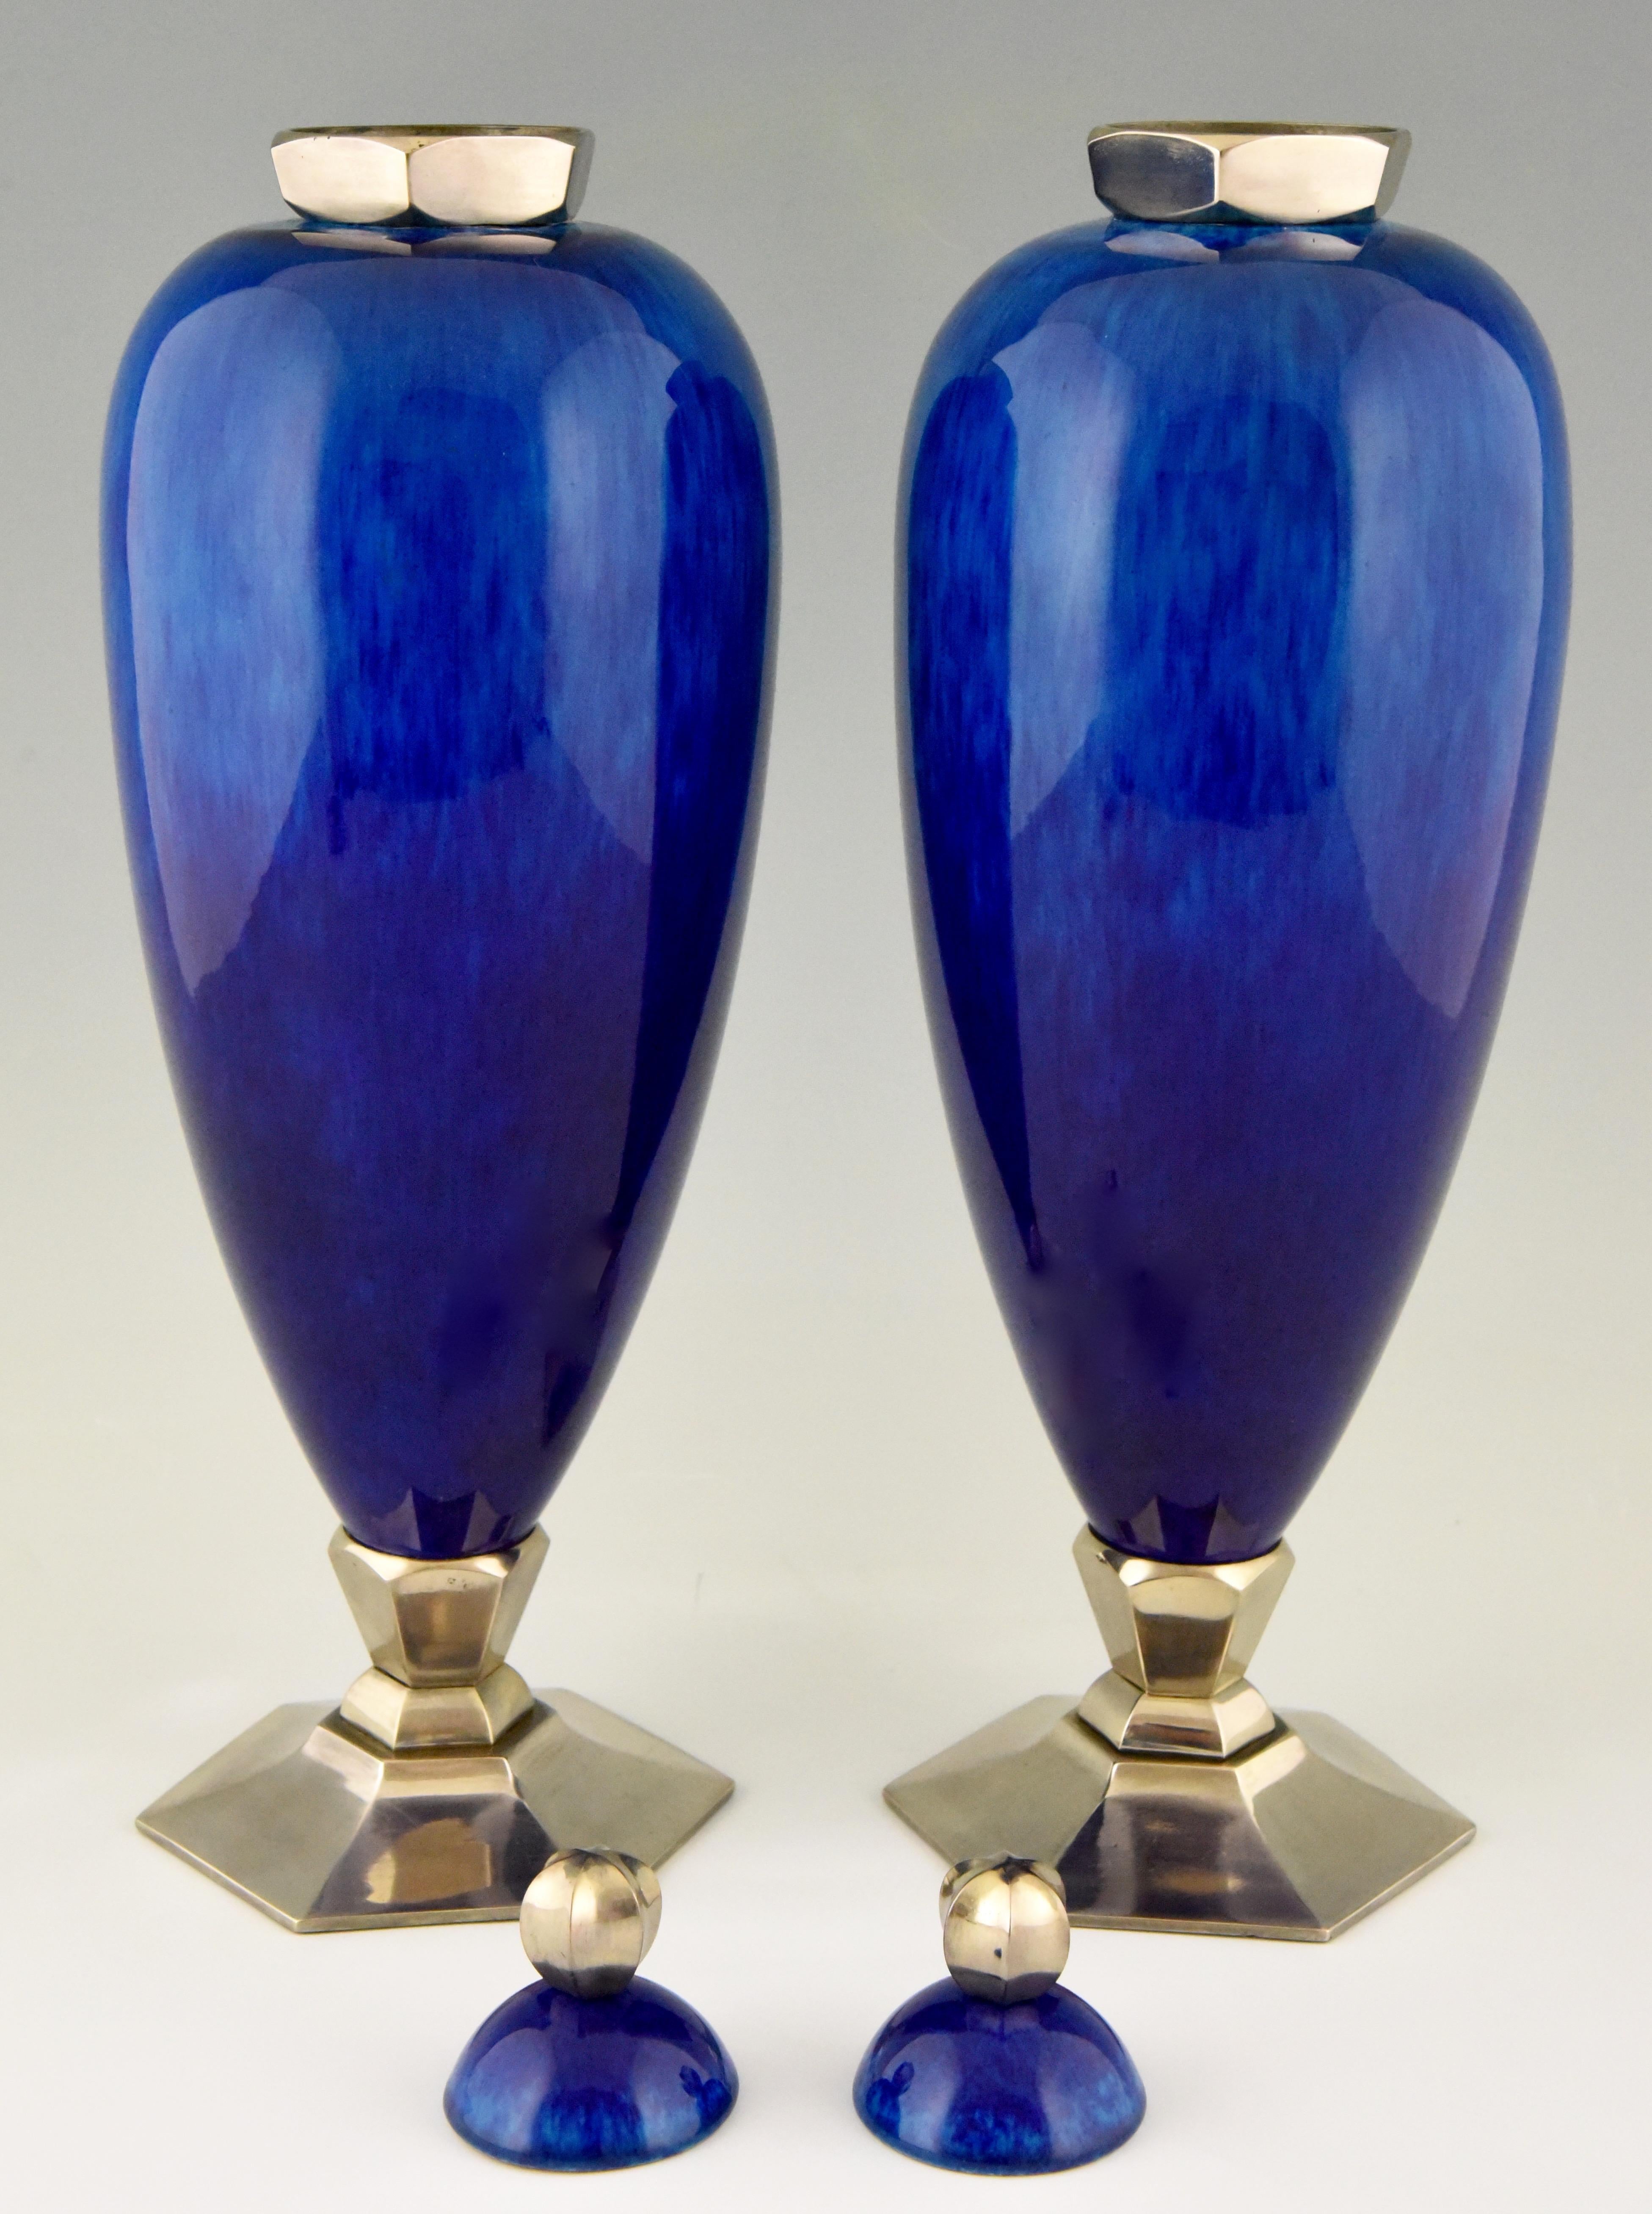 French Pair of Art Deco Blue Ceramic Vases or Urns Paul Milet for Sèvres France, 1925